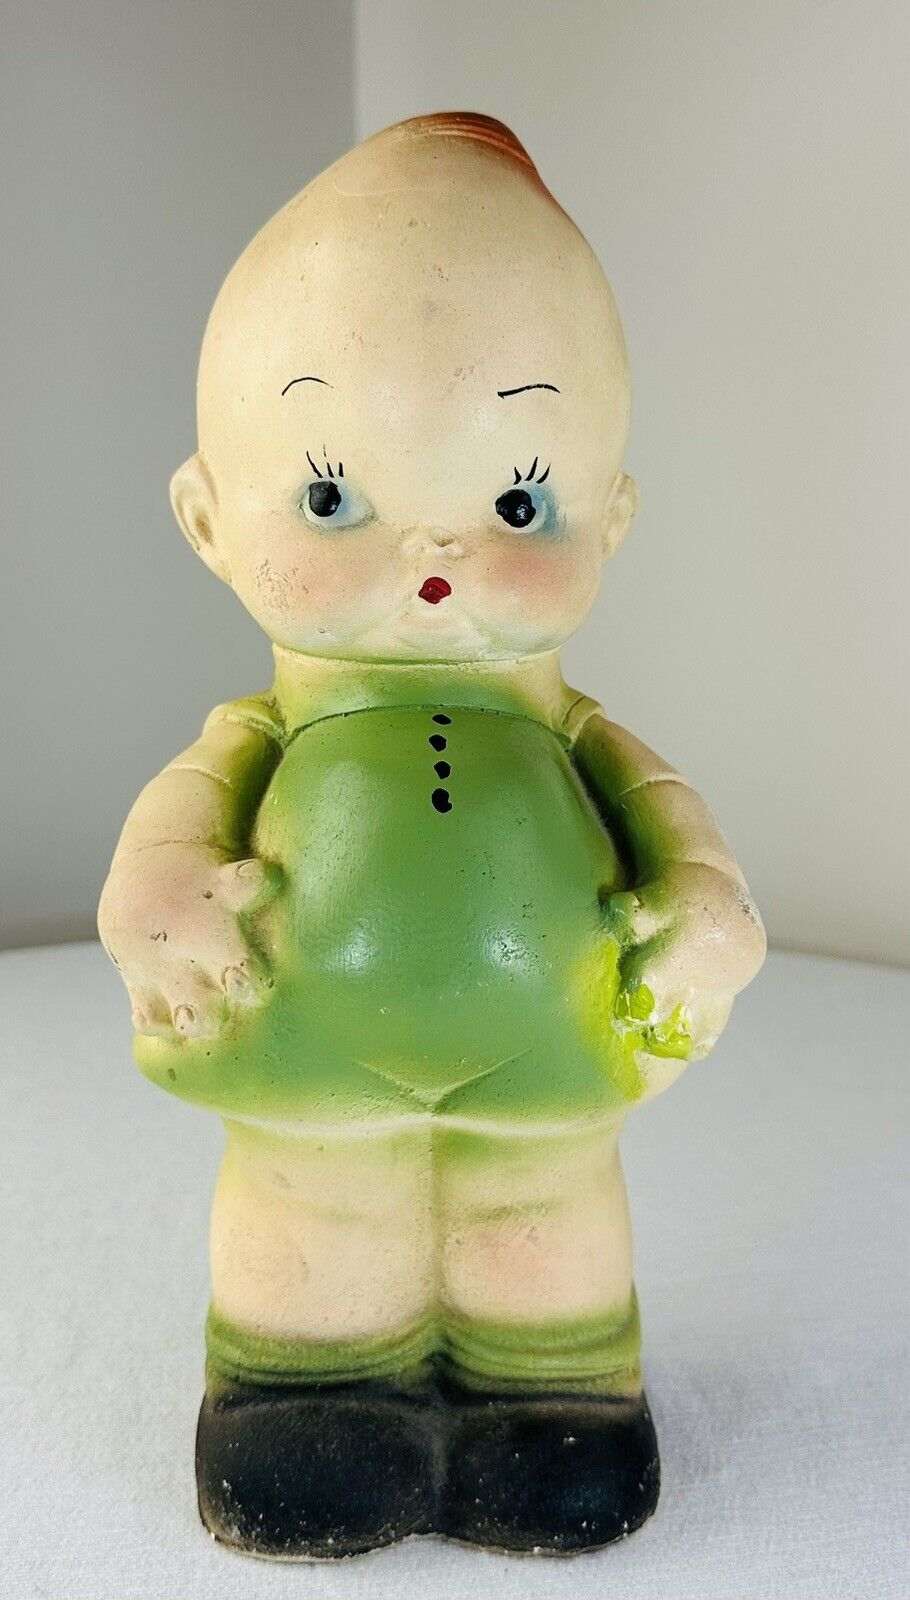 Vintage Chalkware Kewpie Doll Carnival Prize Bank Doll 1930s Creepy Baby Statue